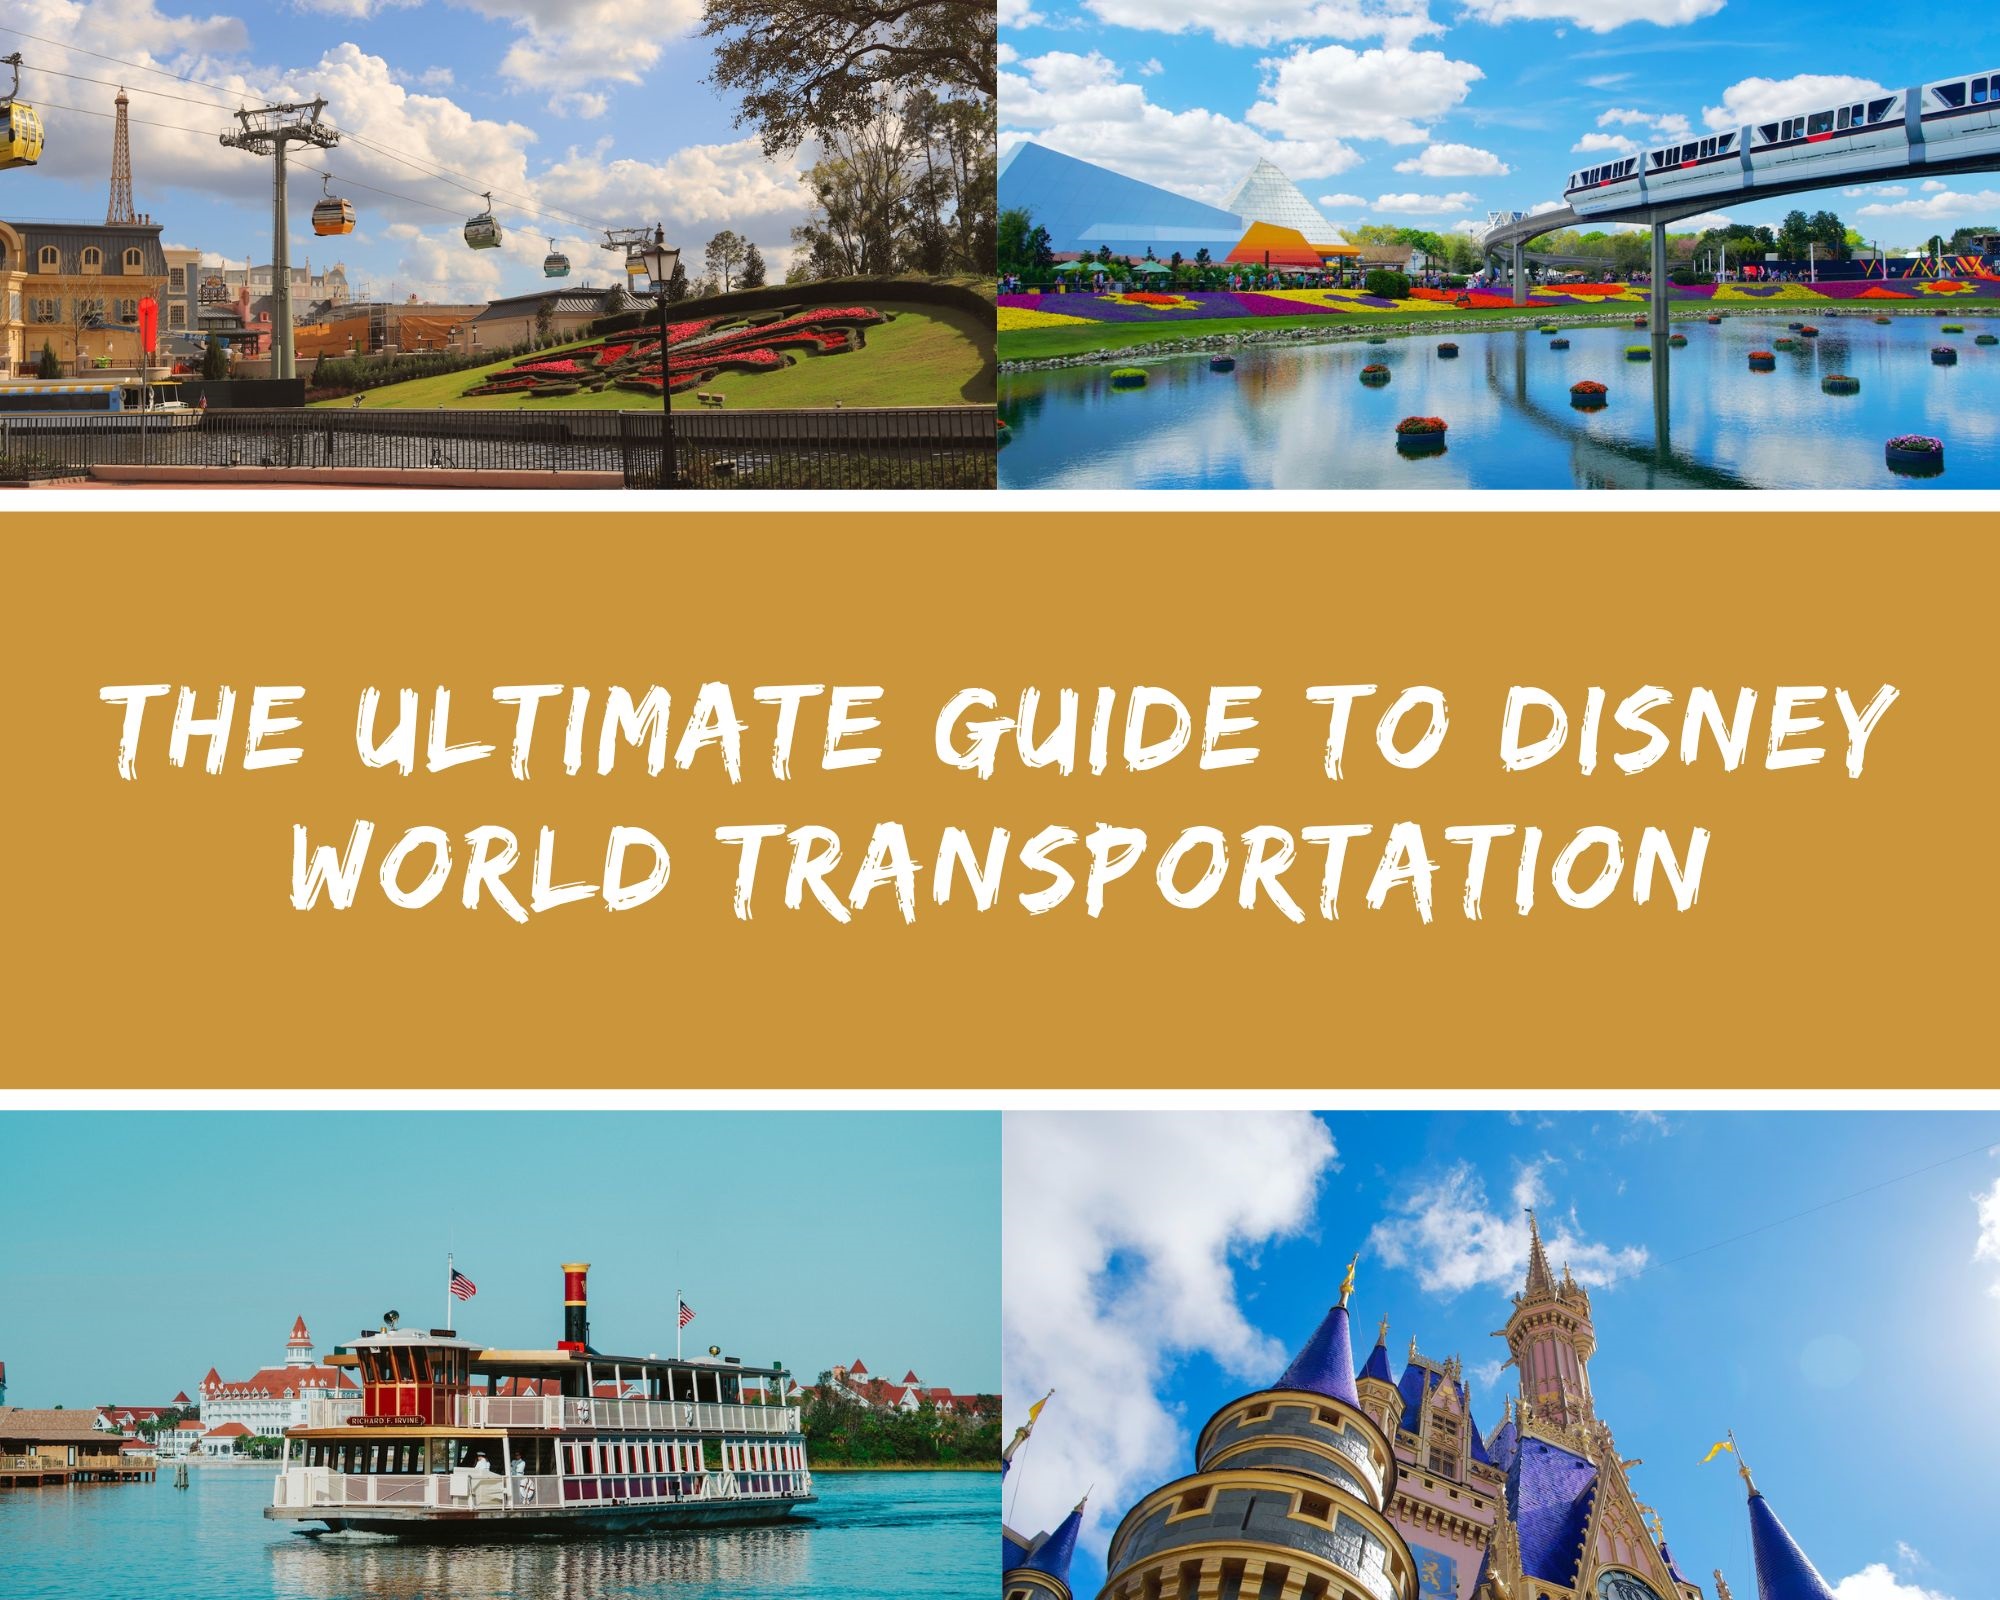 Disney World Transportation Between Parks